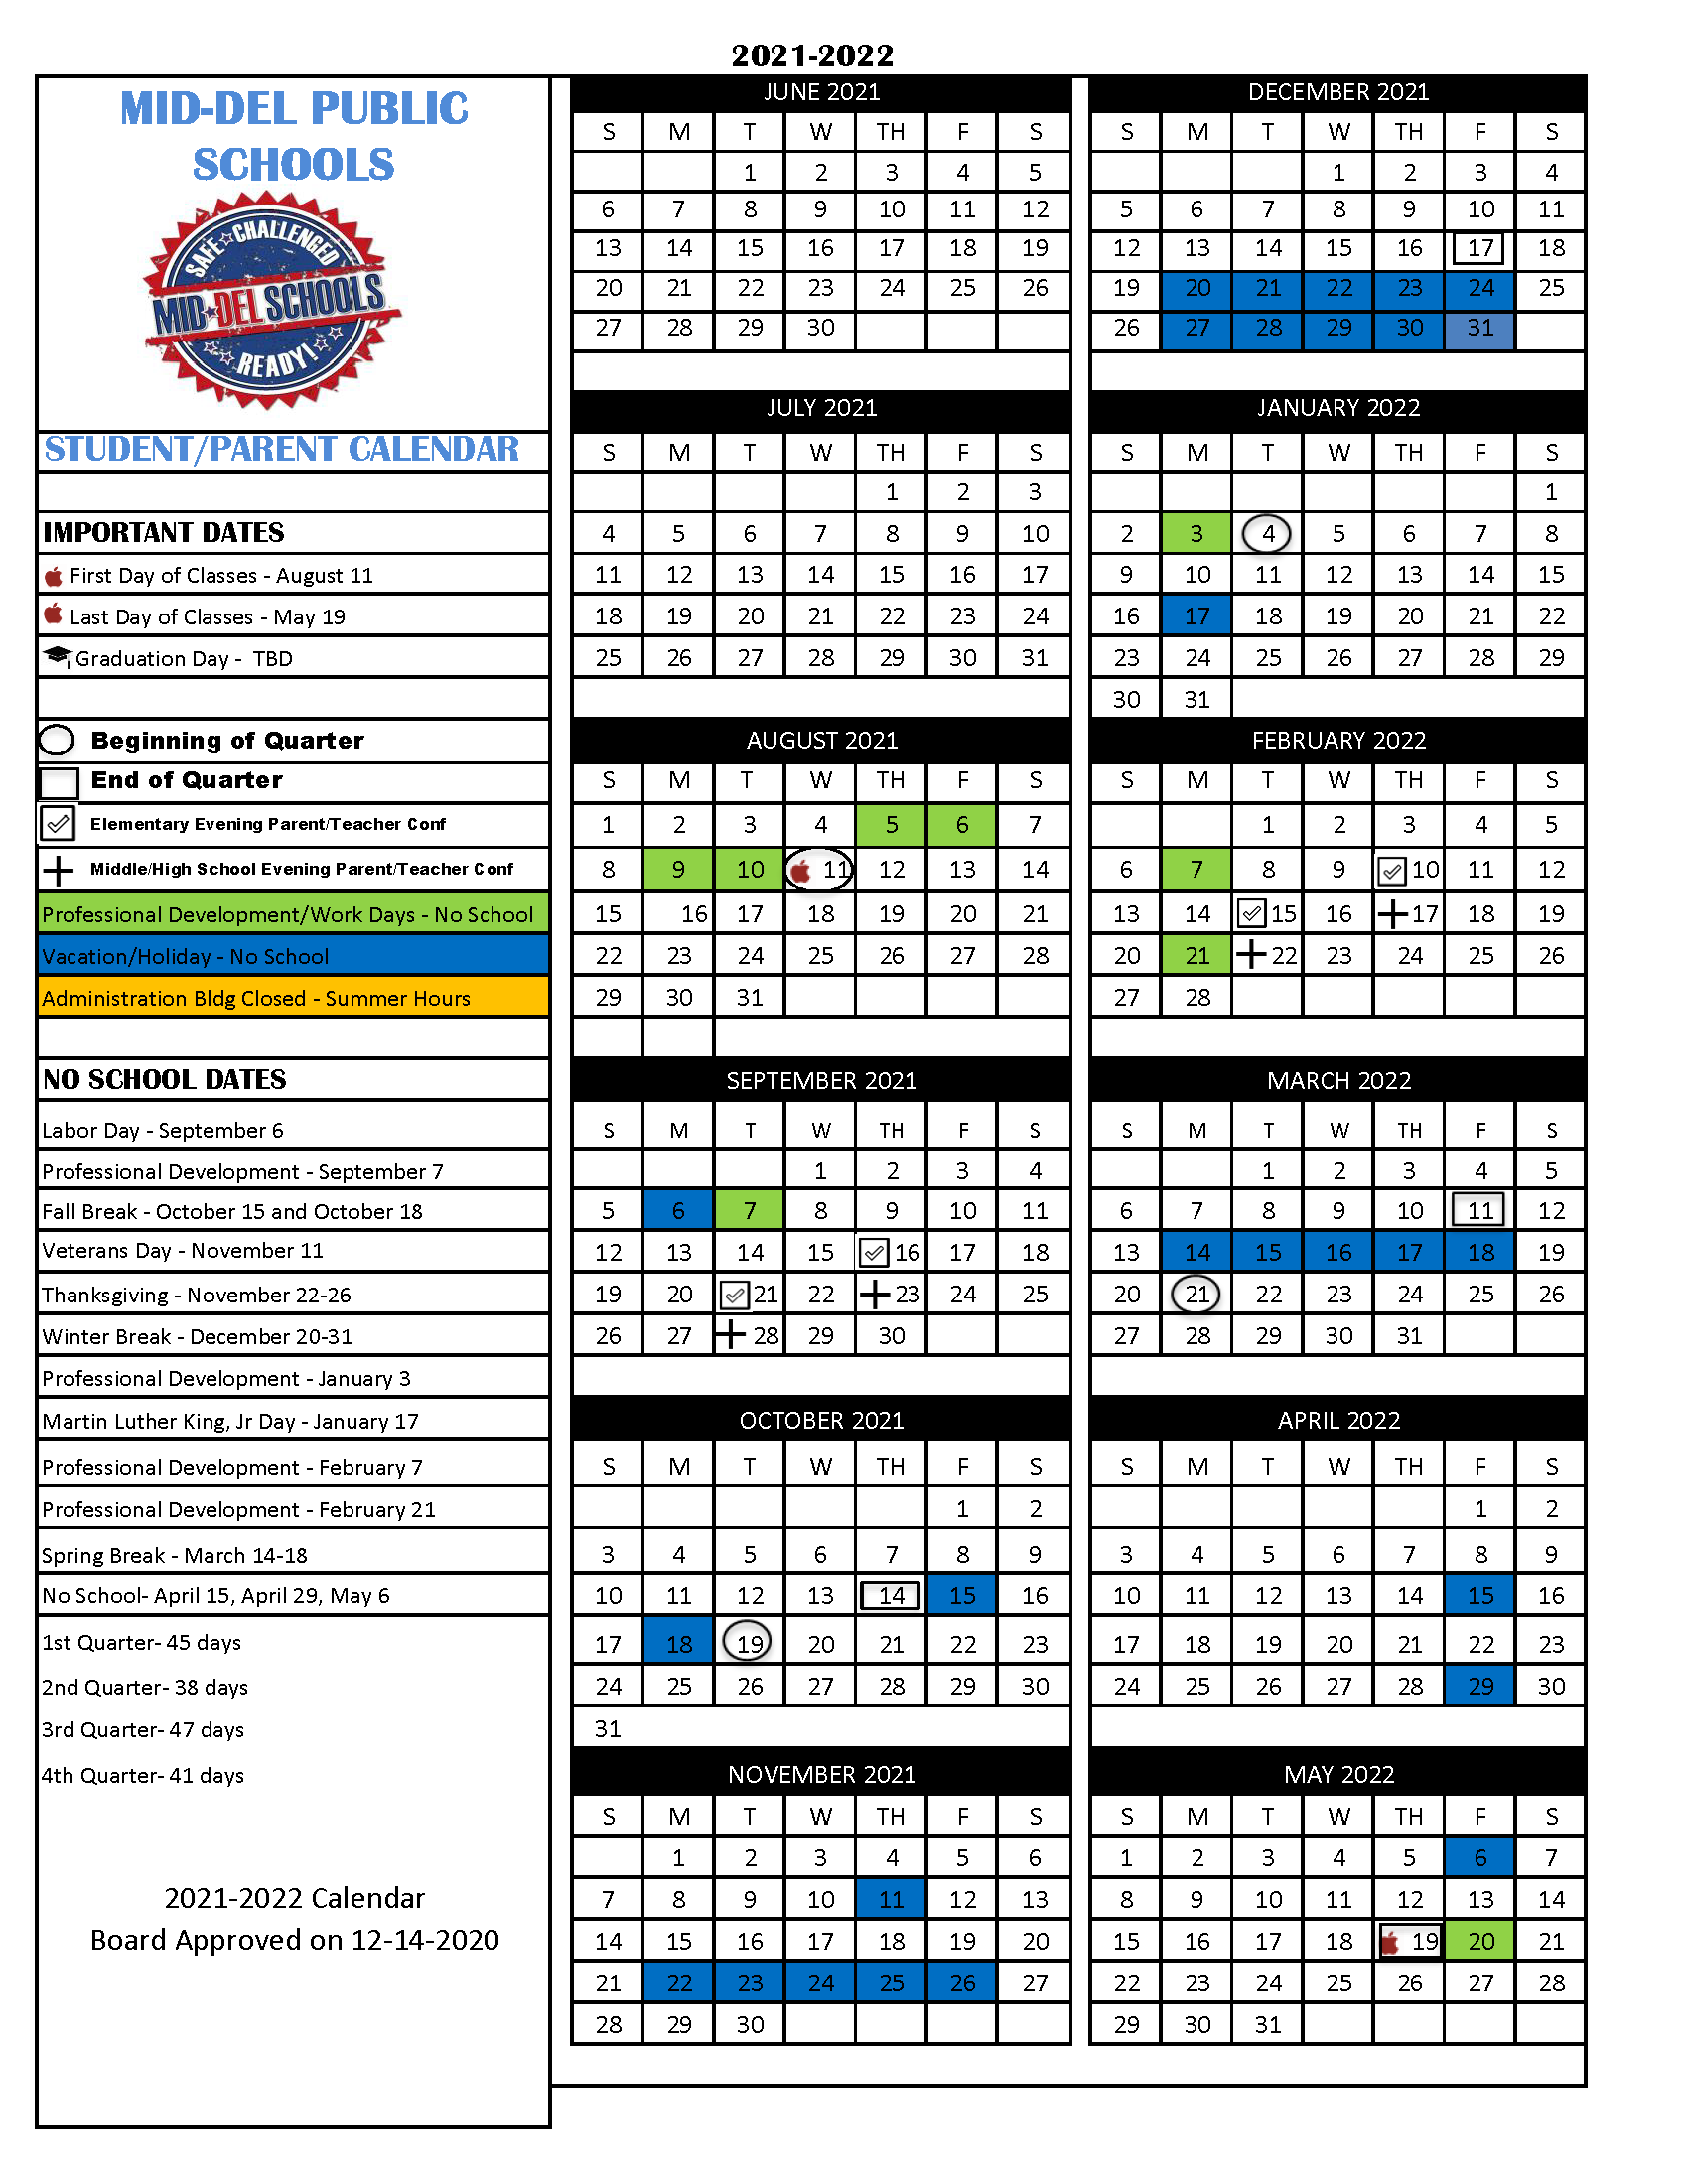 Okstate Academic Calendar Fall 2022 2021-2022 School Calendar | Mid-Del School District